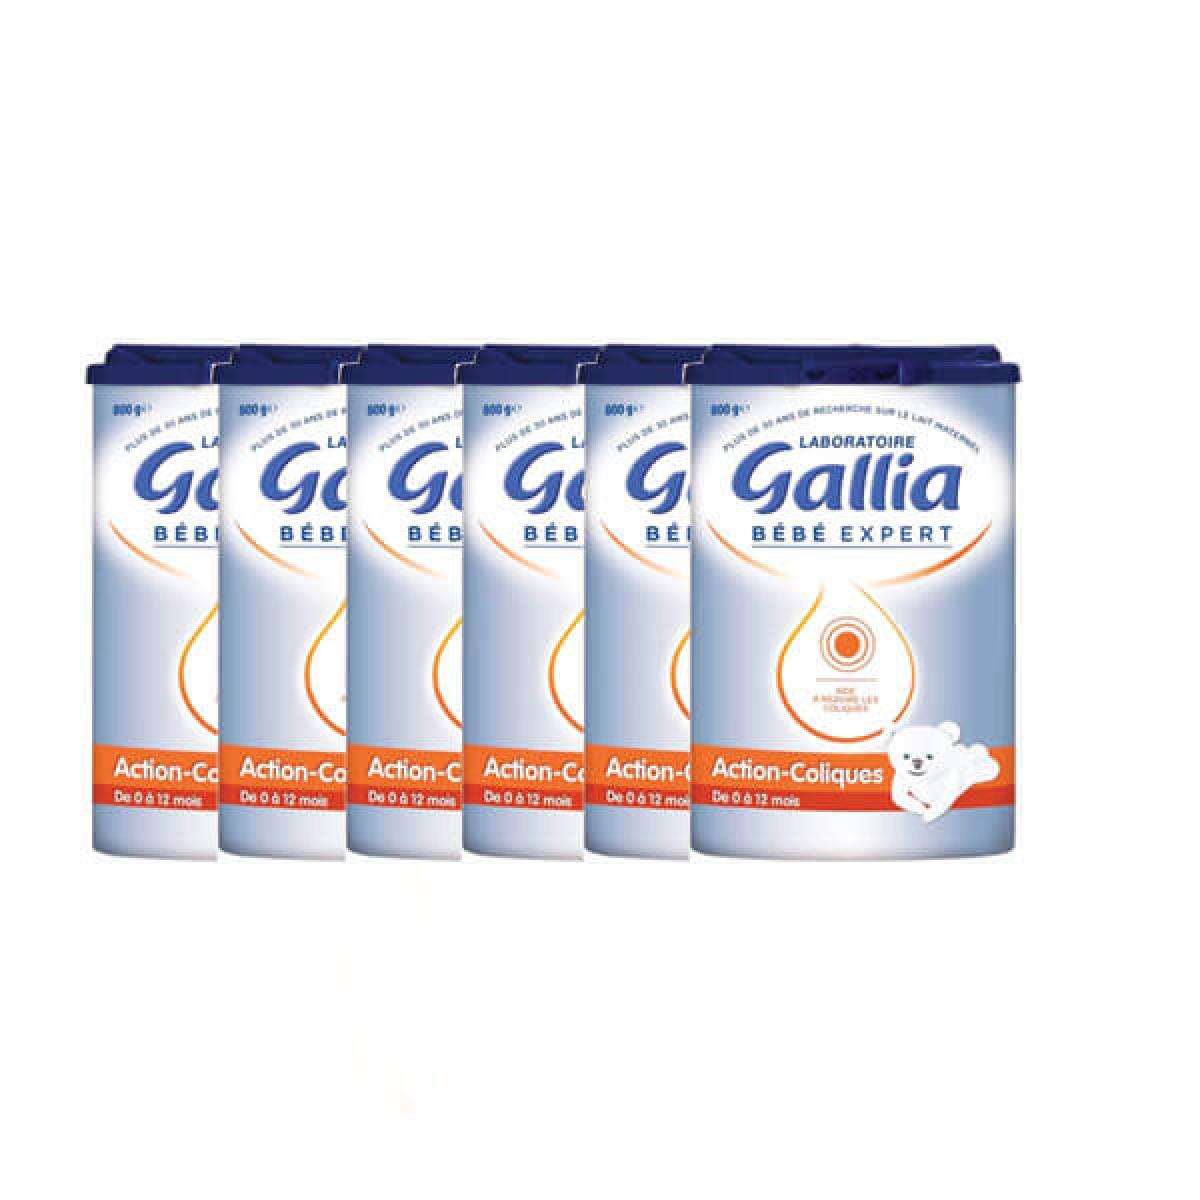 Gallia Bebe Expert Action Coliques Lot 6x800g Parapharmacie Pharmarket